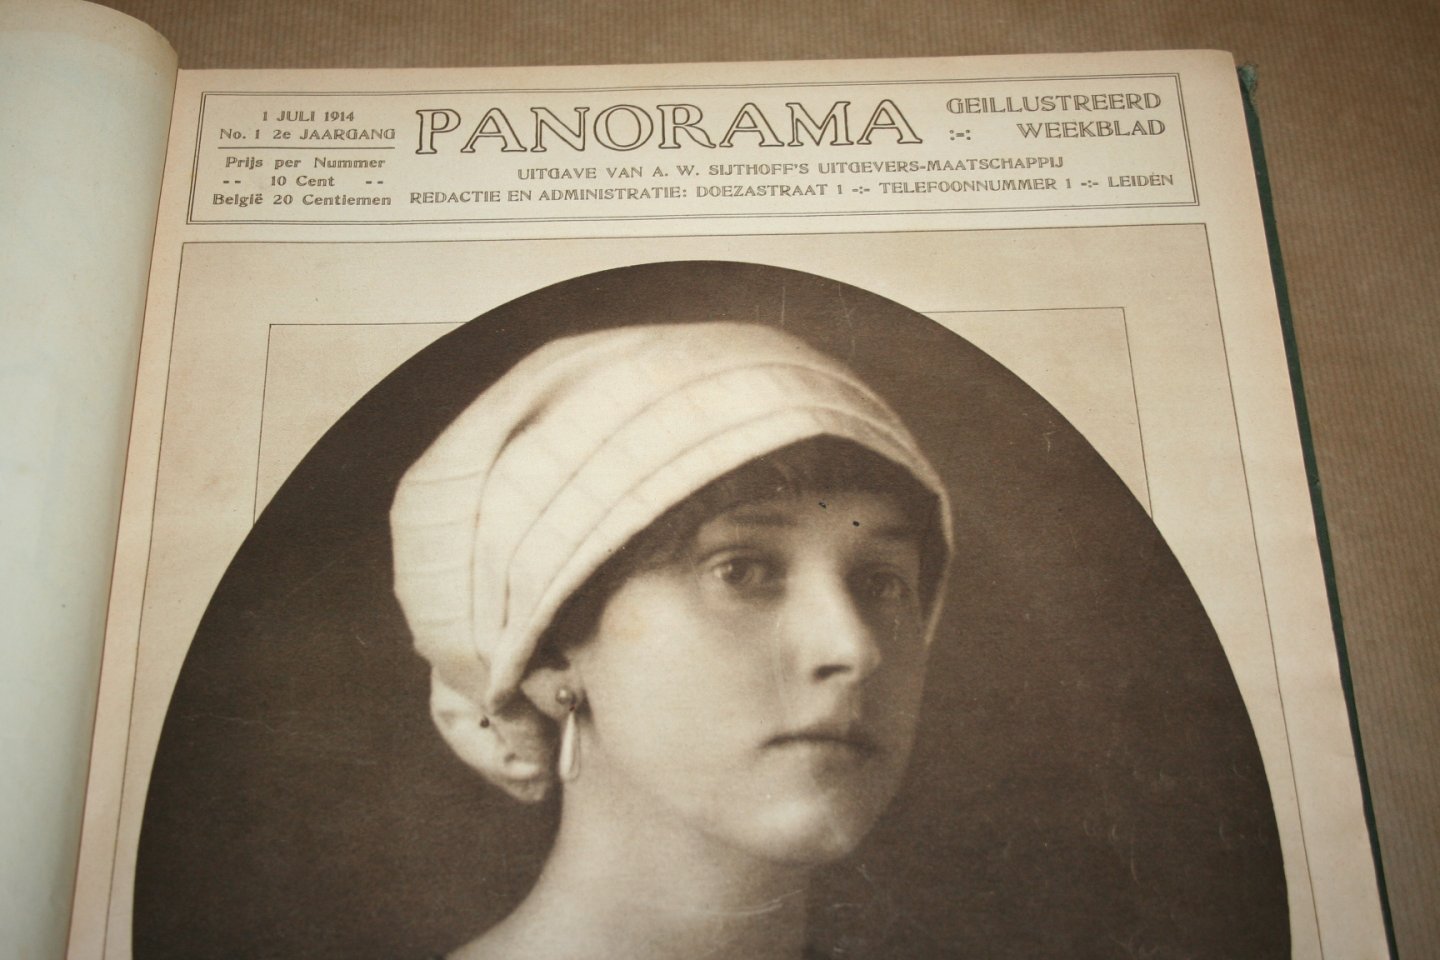  - Panorama - 2e jaargang 1914